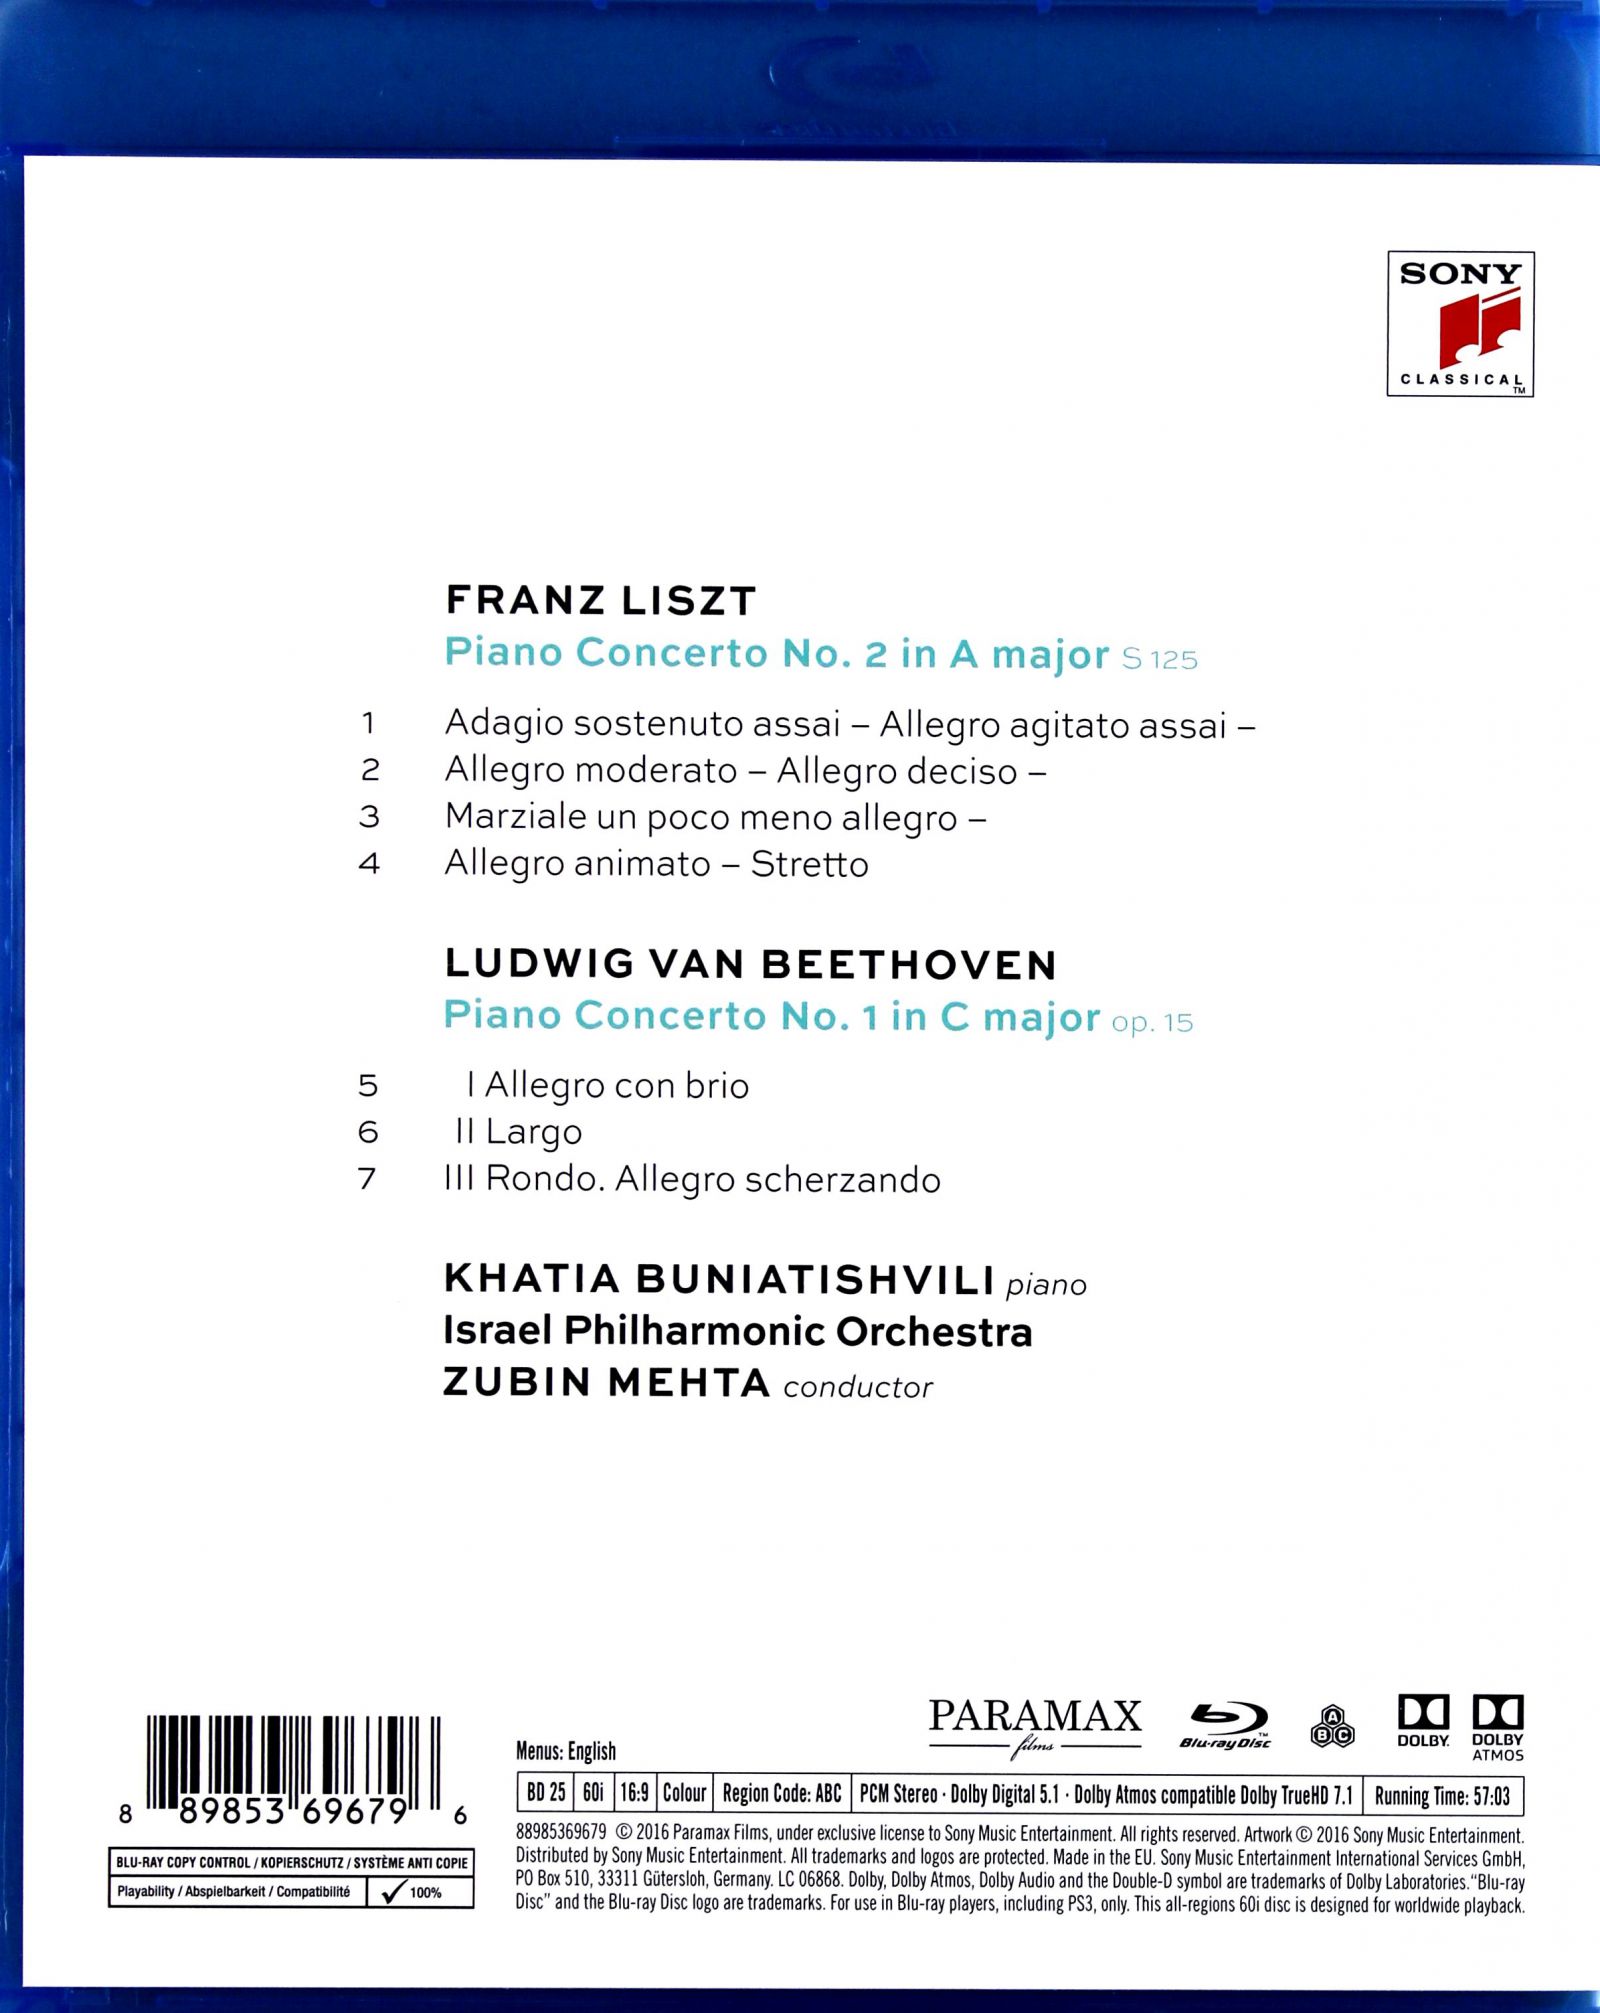 Khatia Buniatishvili 리스트: 피아노 협주곡 2번 / 베토벤: 협주곡 1번 - 카티아 부니아티쉬빌리, 주빈 메타, 이스라엘 필하모닉